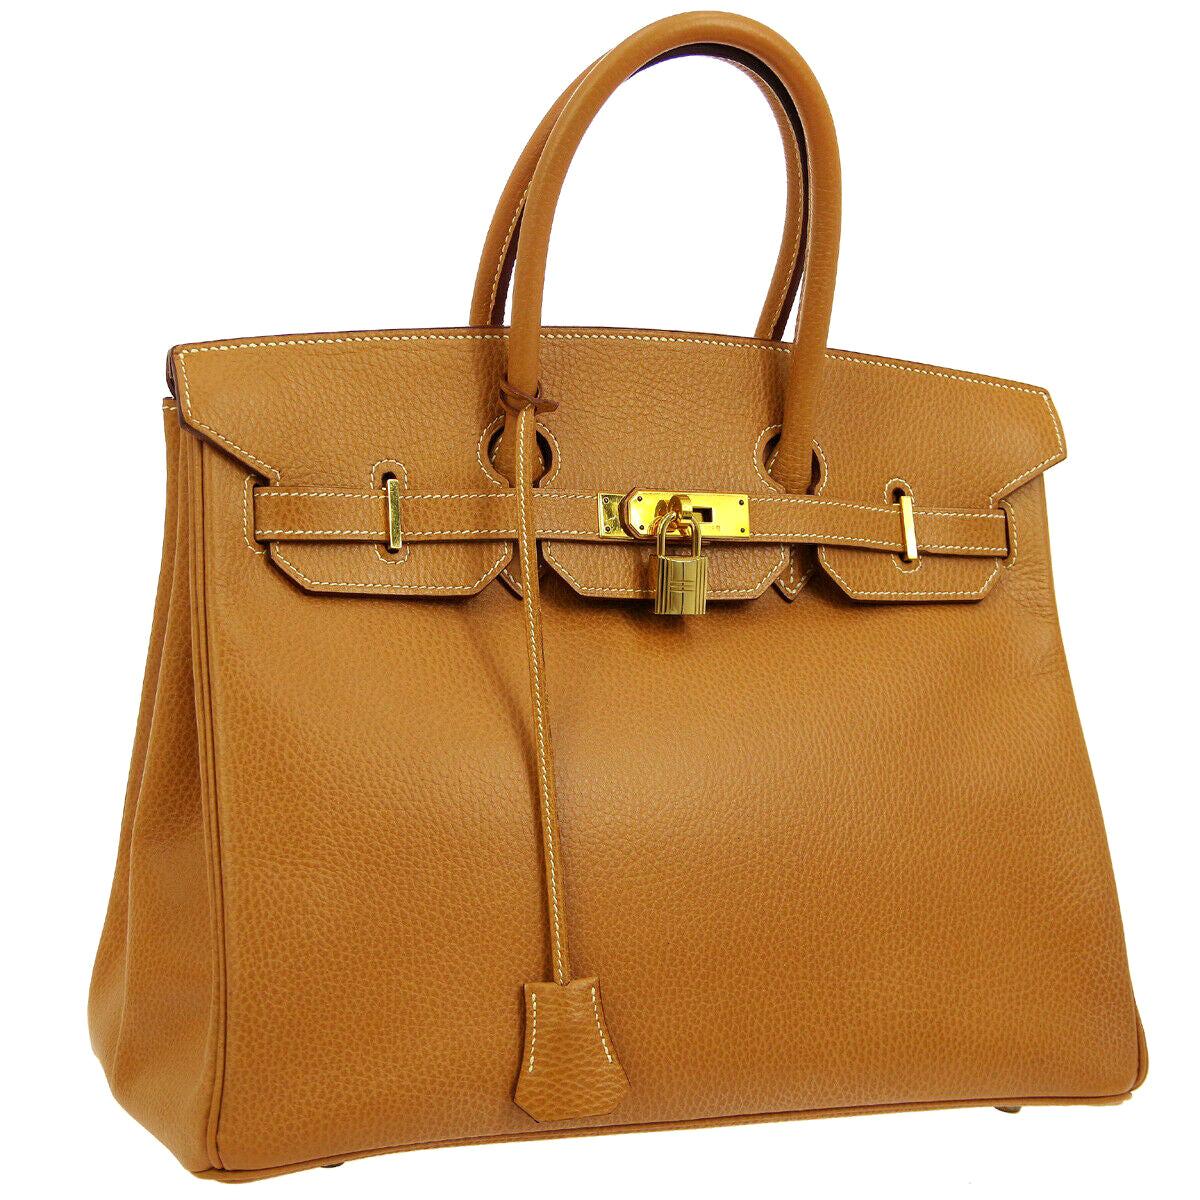 Hermes Birkin 35 Cognac Leather Gold Top Carryall Handle Satchel Travel Tote Bag